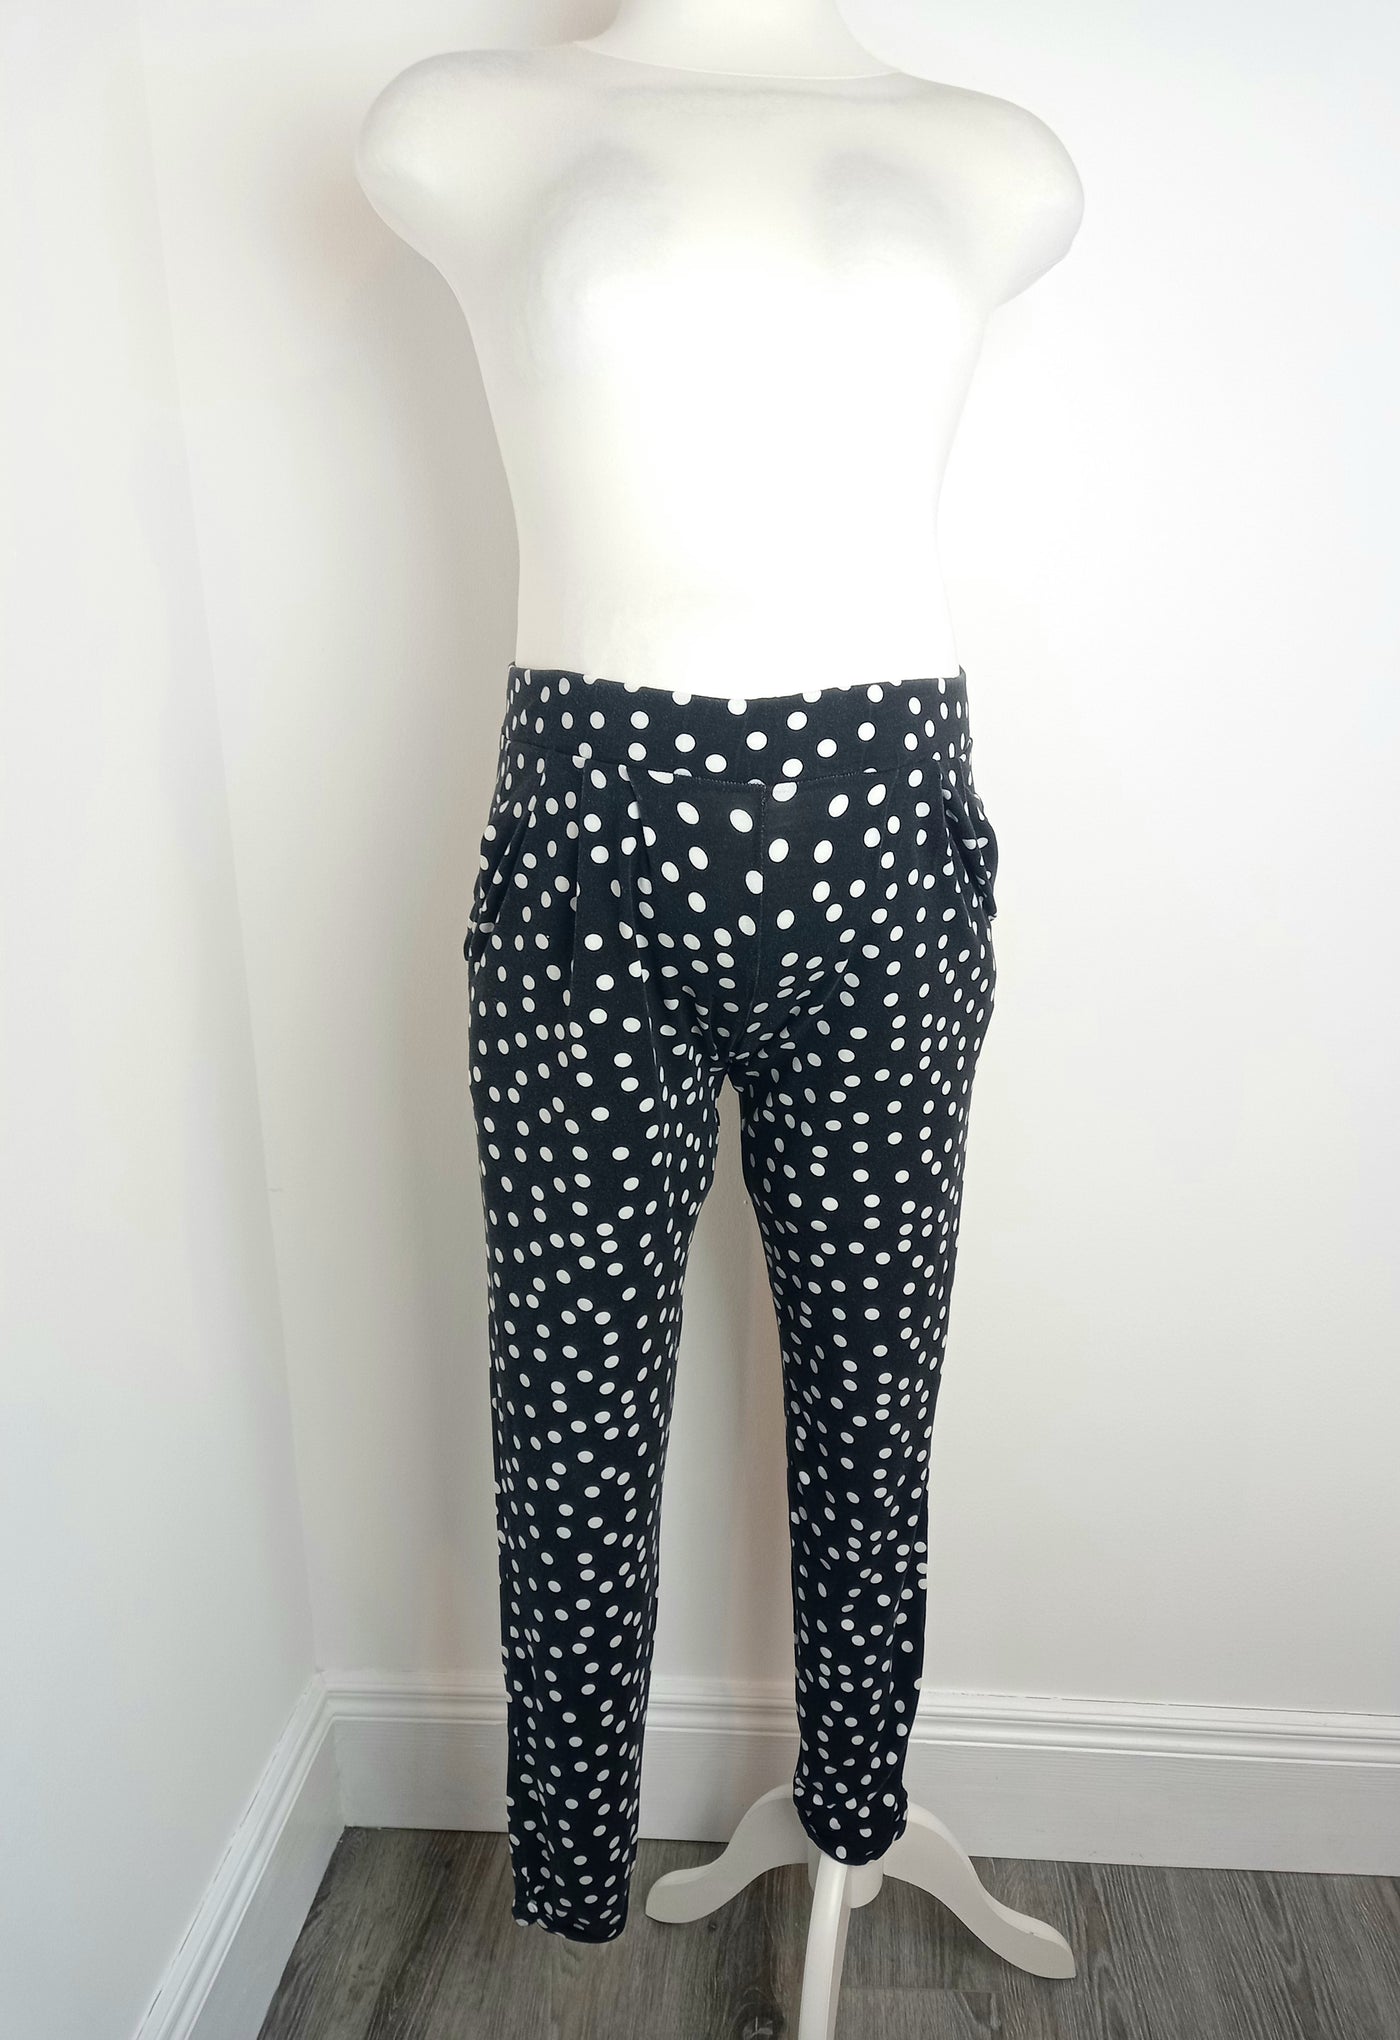 Asos Maternity black & white polkadot underbump lounge pants - Size 12